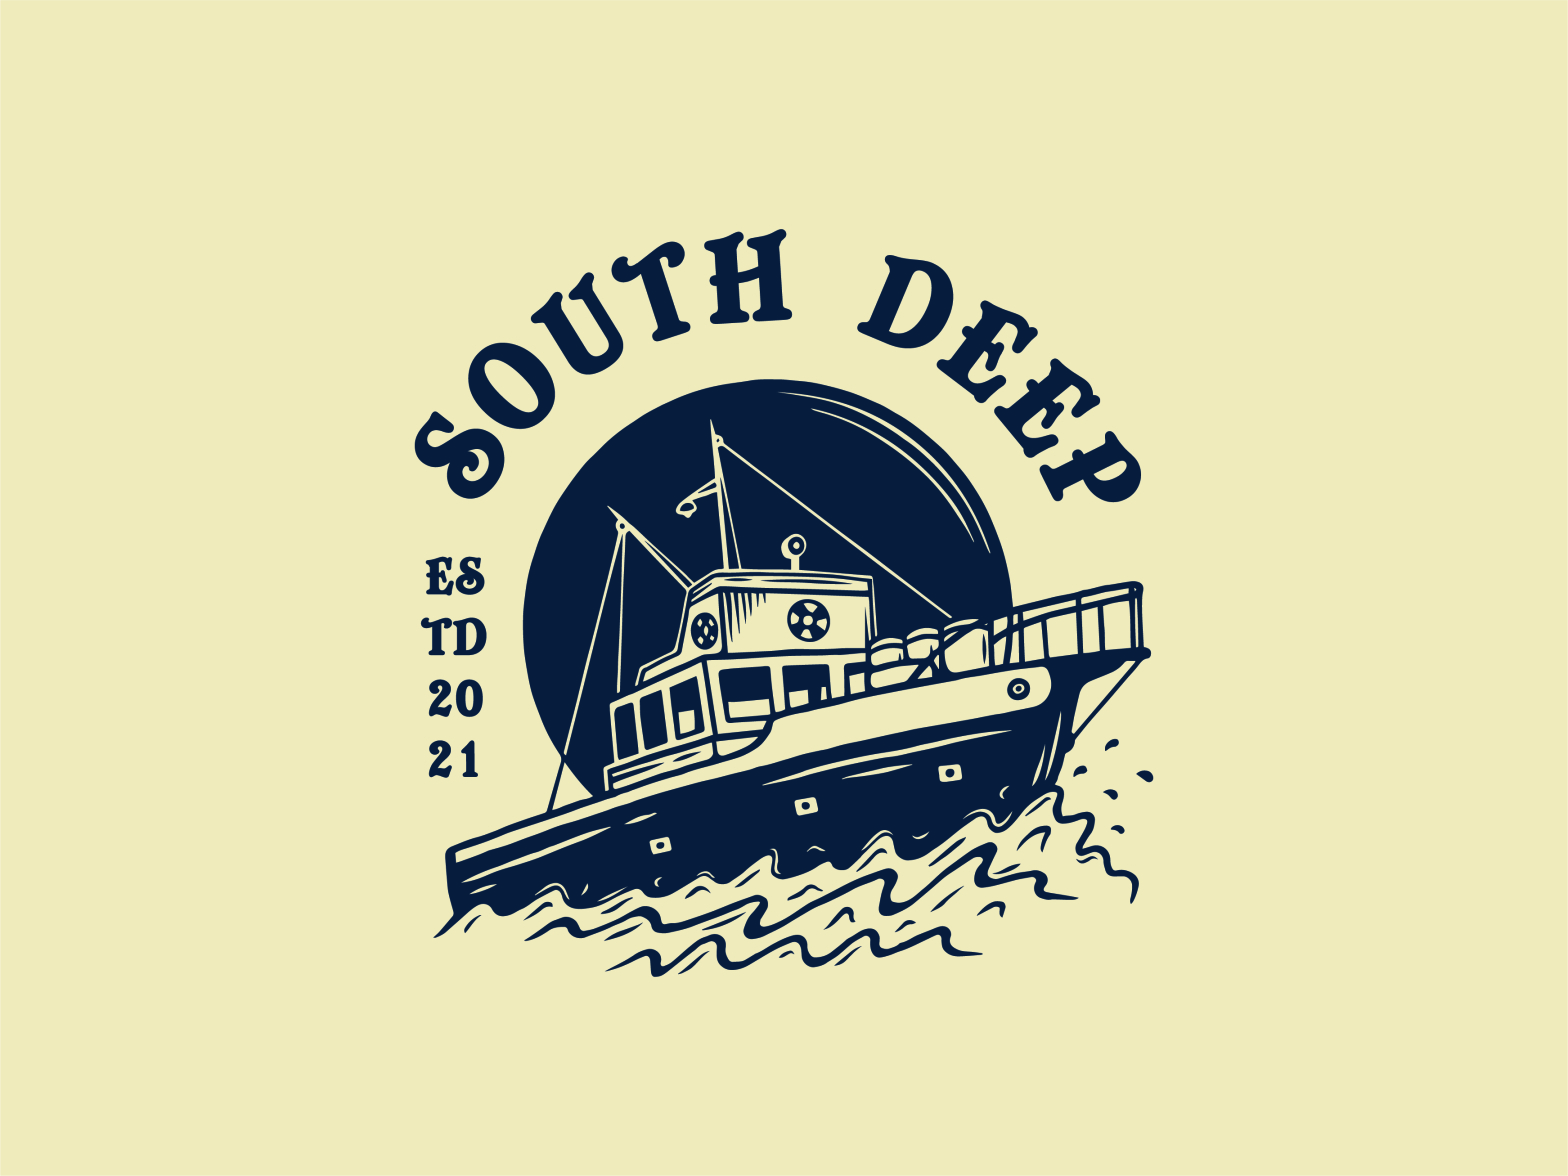 South Deep by SeaSalt Creative on Dribbble